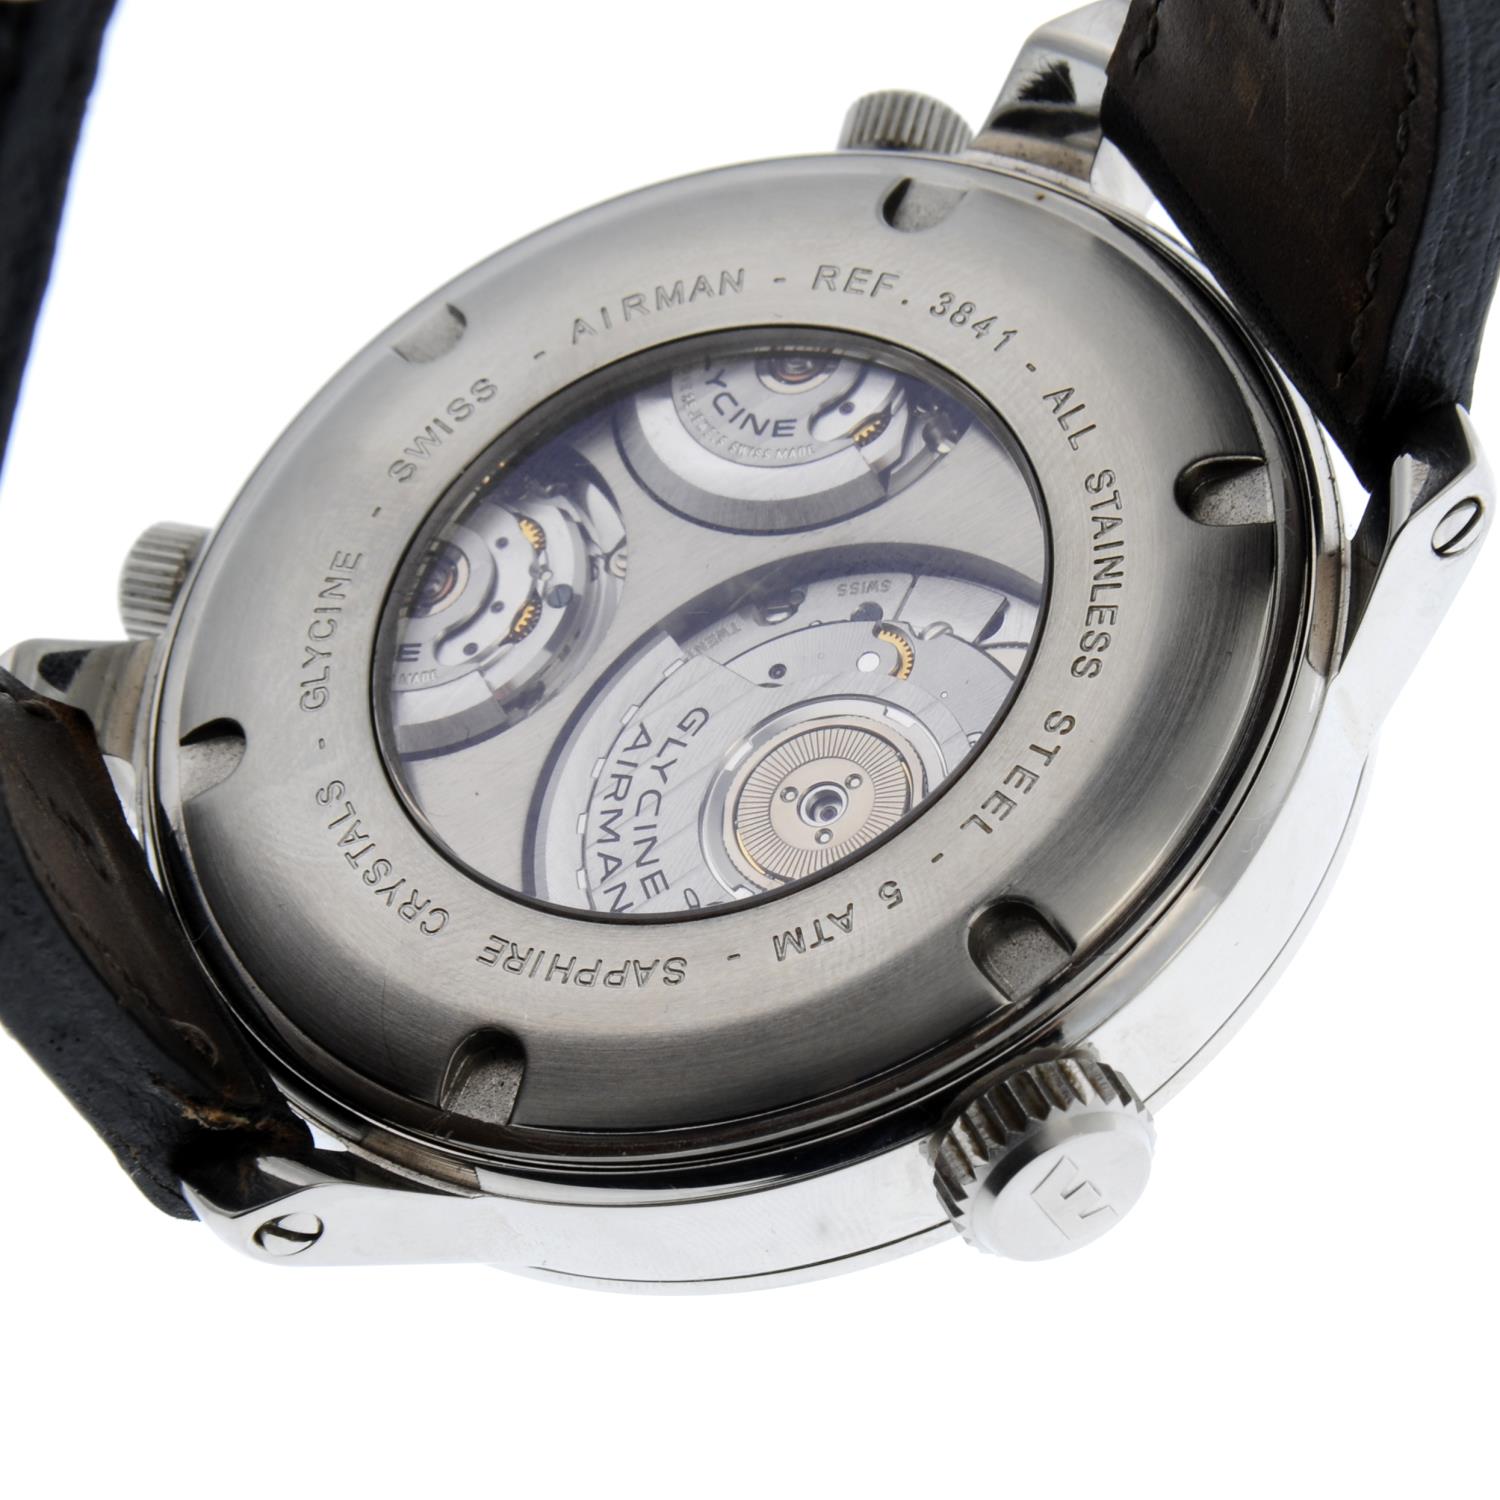 GLYCINE - an Airman7 Crosswise wristwatch. - Image 2 of 5